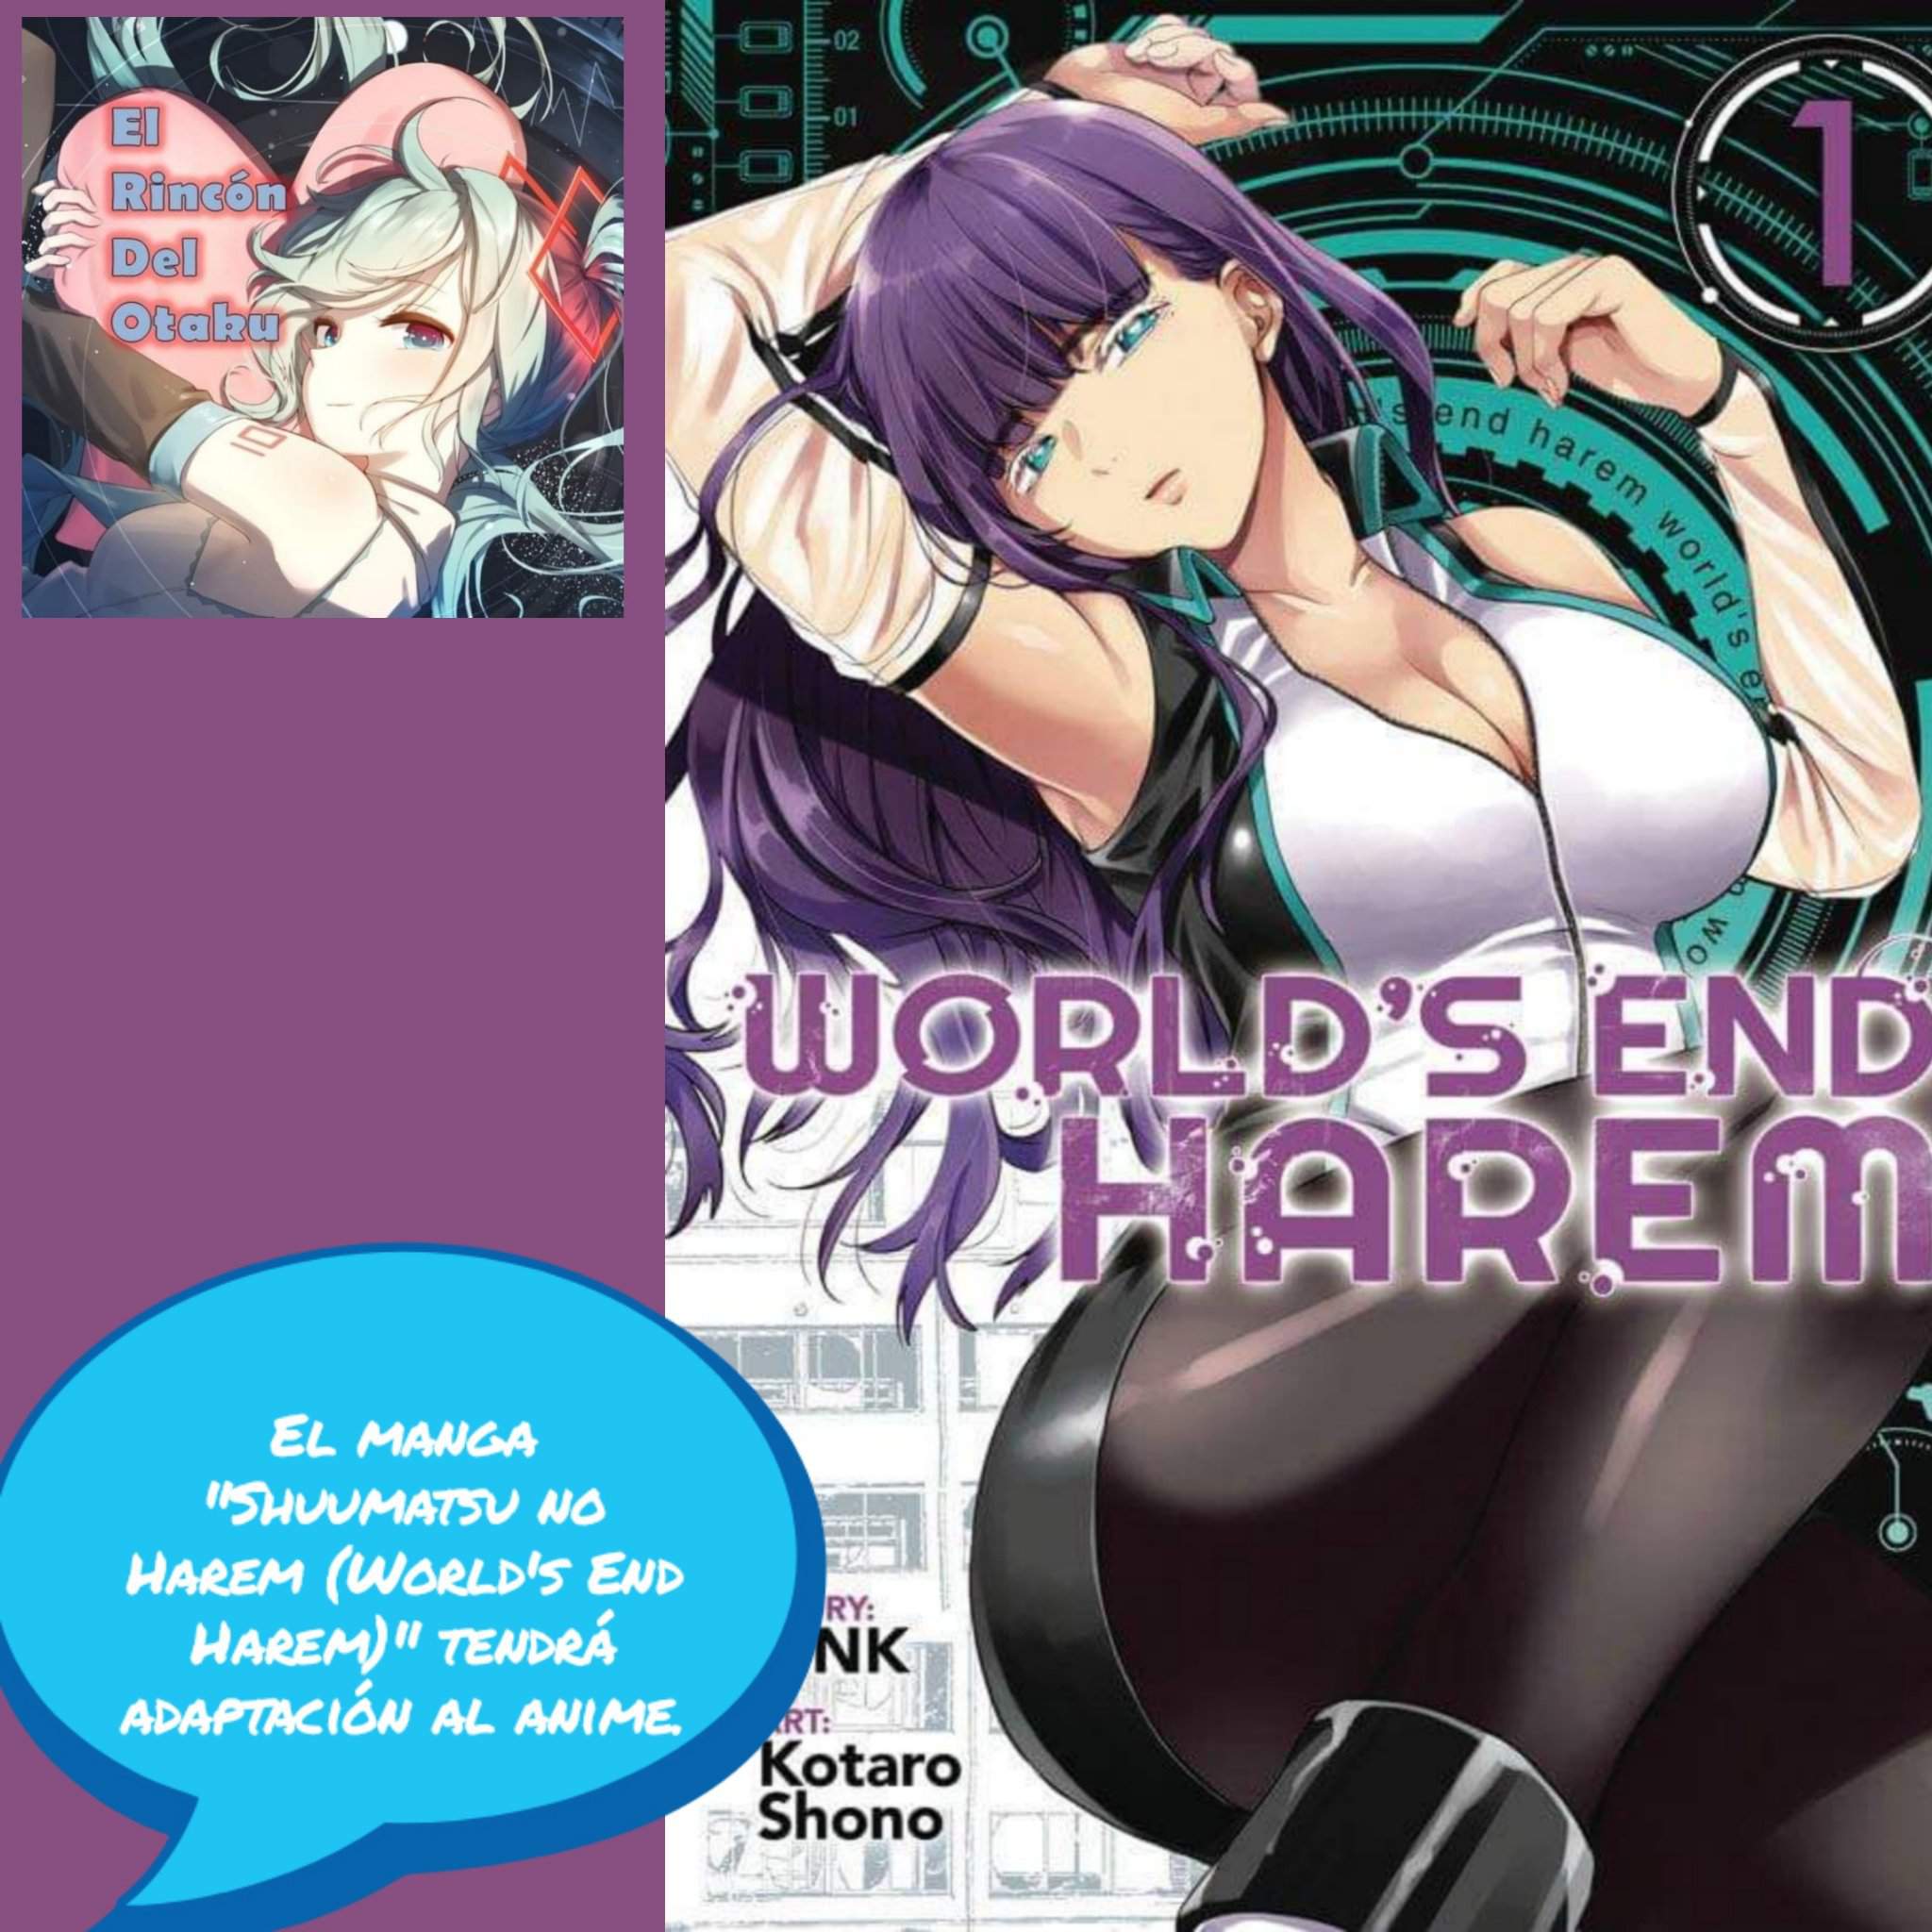 El Manga Shuumatsu No Harem World S End Harem Tendrá Adaptación Al Anime Anime Universal